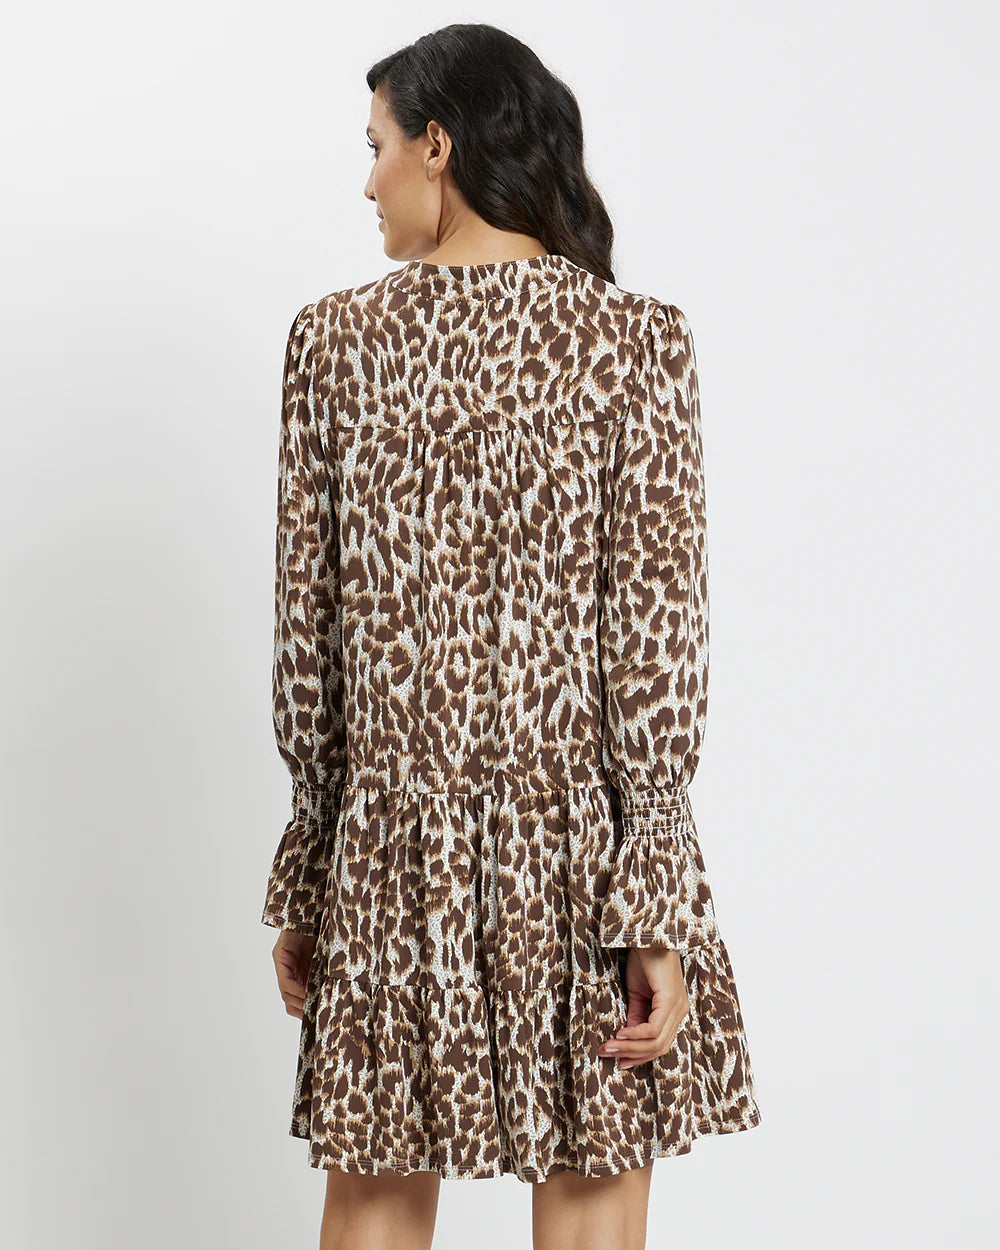 Jude Connally Tammi Dress Jude Cloth in Speckled Cheetah